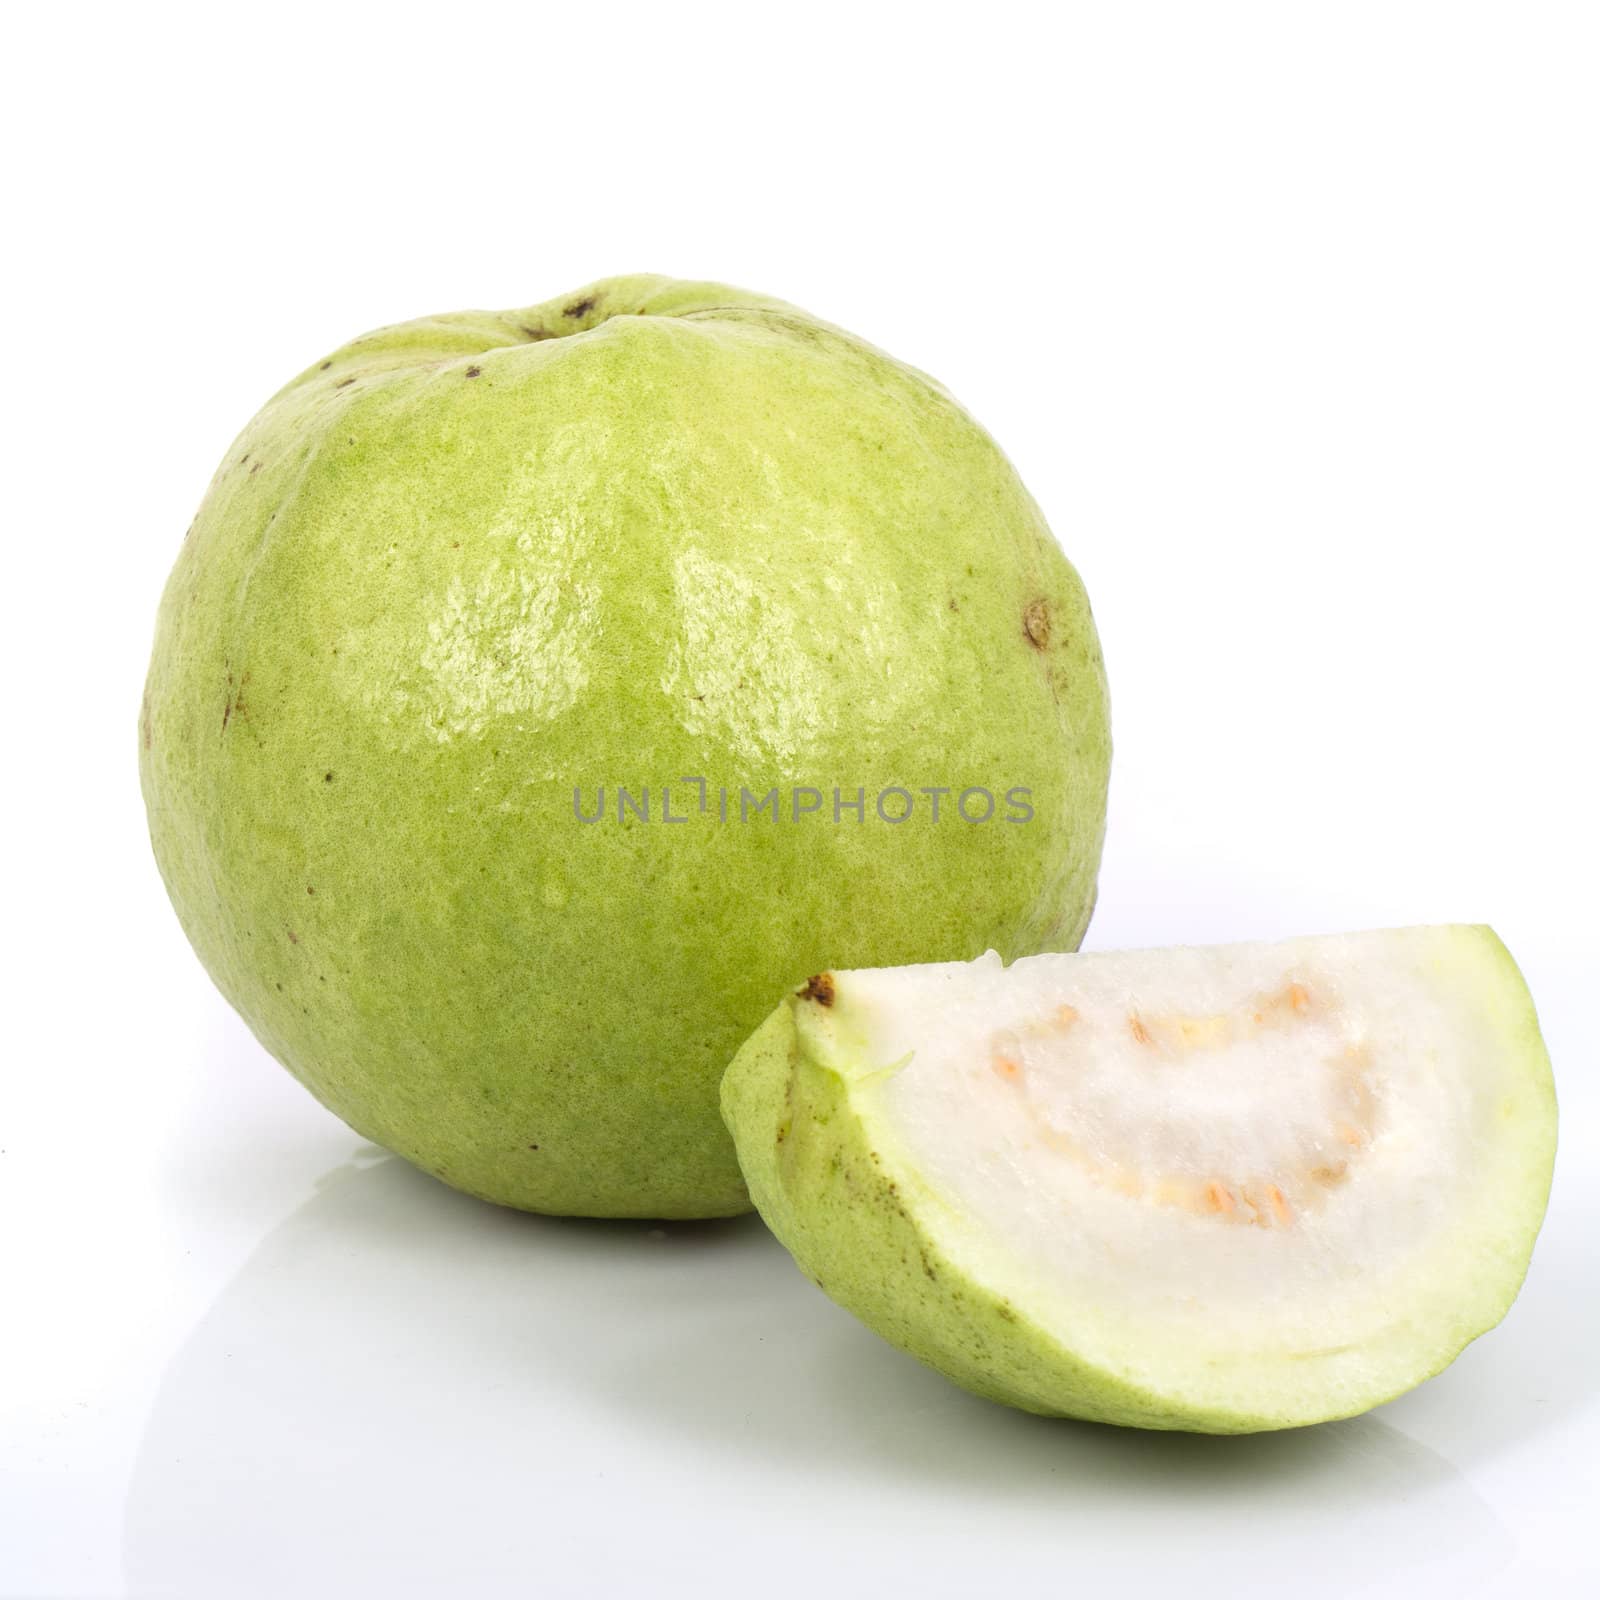 Guavas on  isolated white background